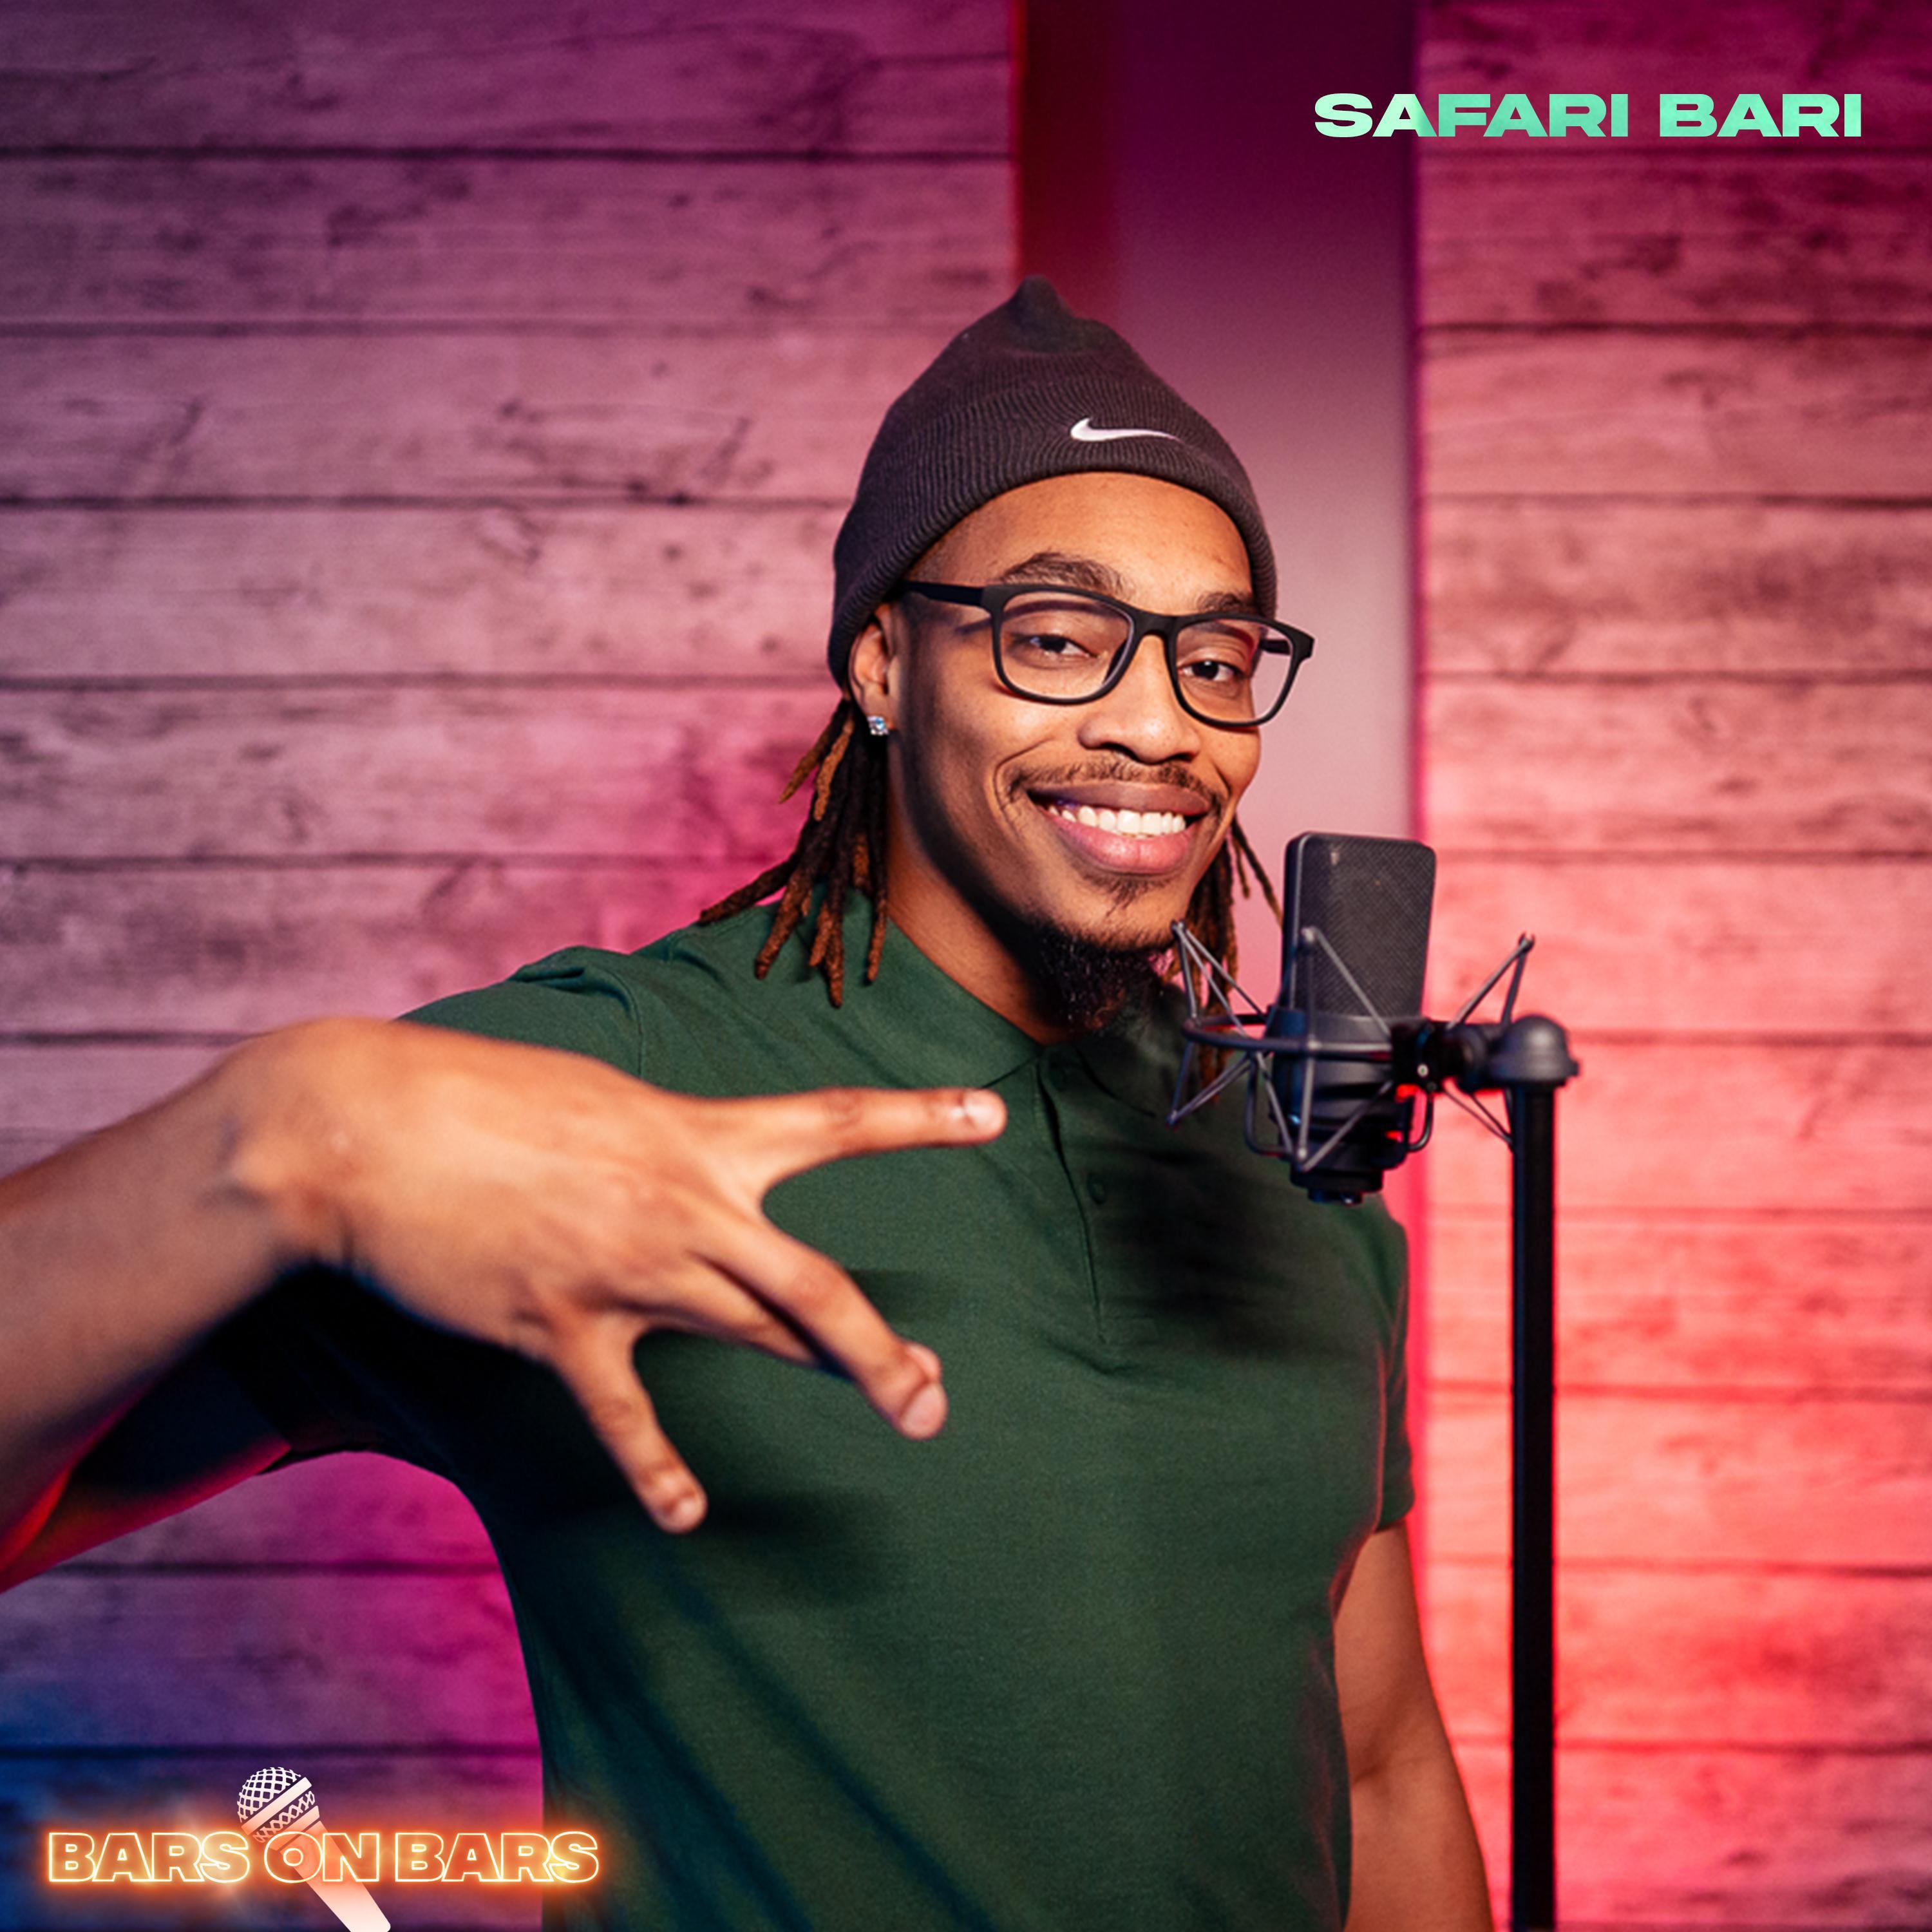 Safari Bari - Bars On Bars I S2:E1 (feat. Bars On Bars)